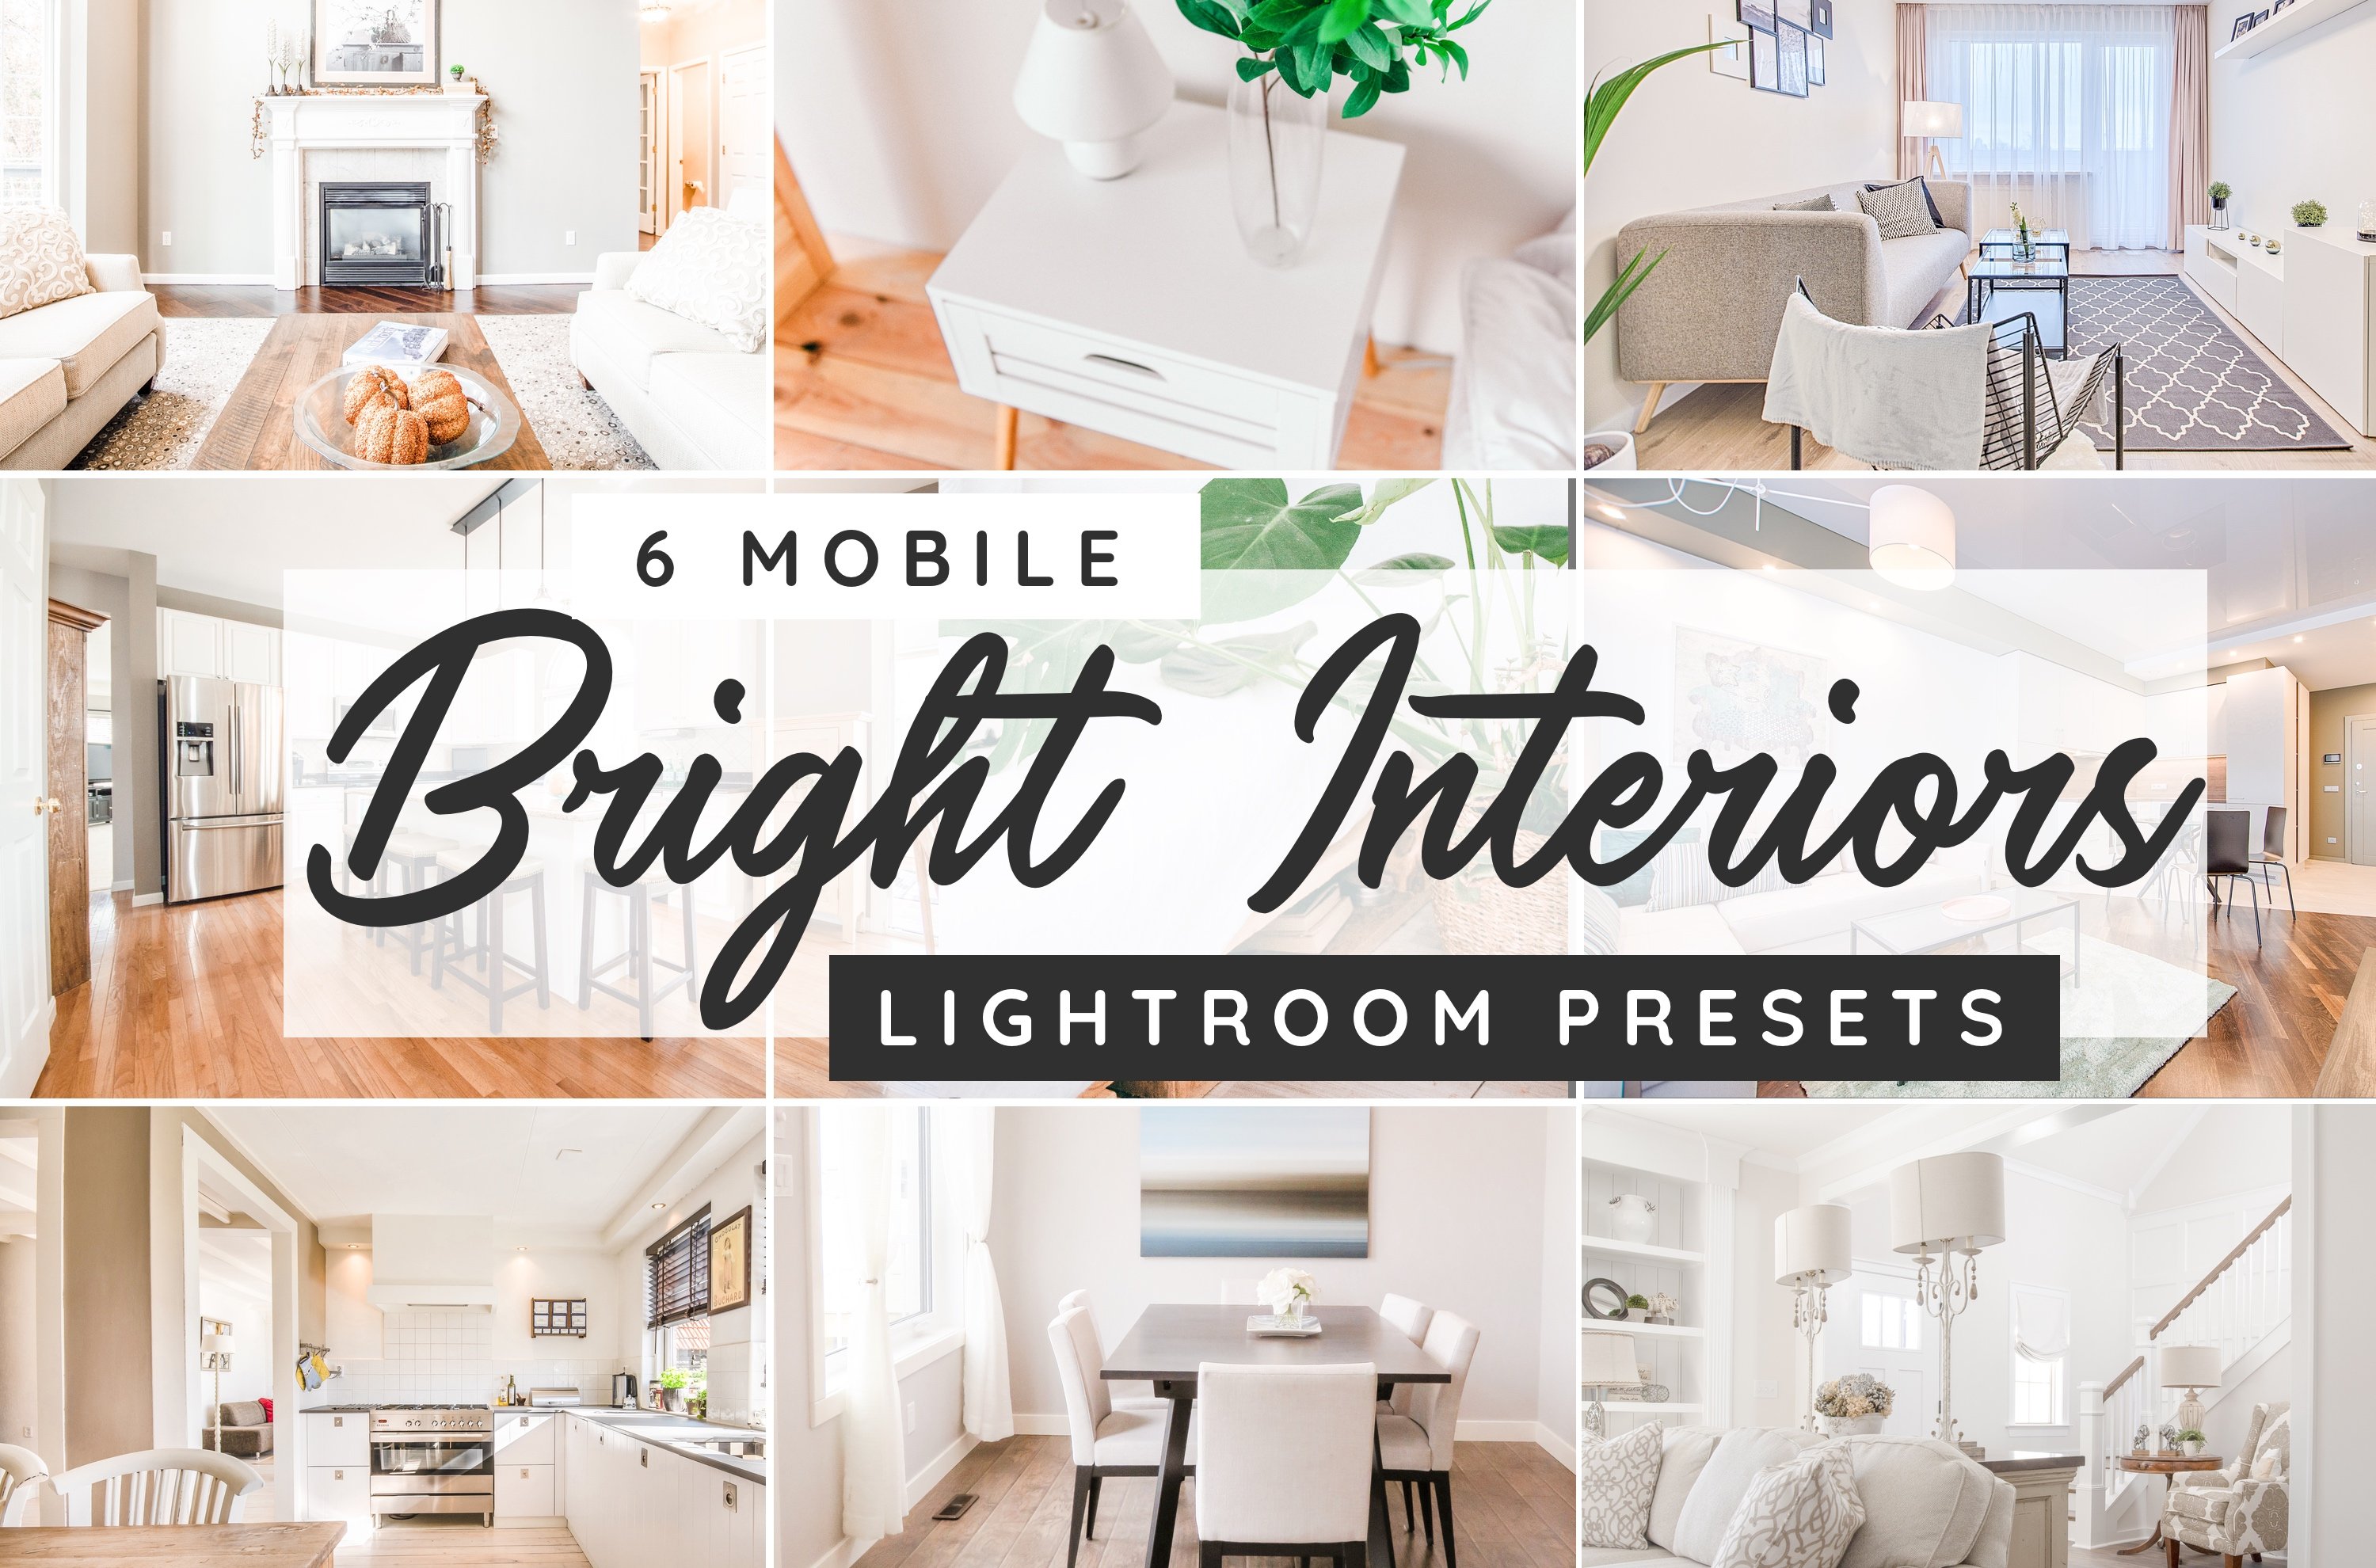 Bright interiors mobile presetscover image.